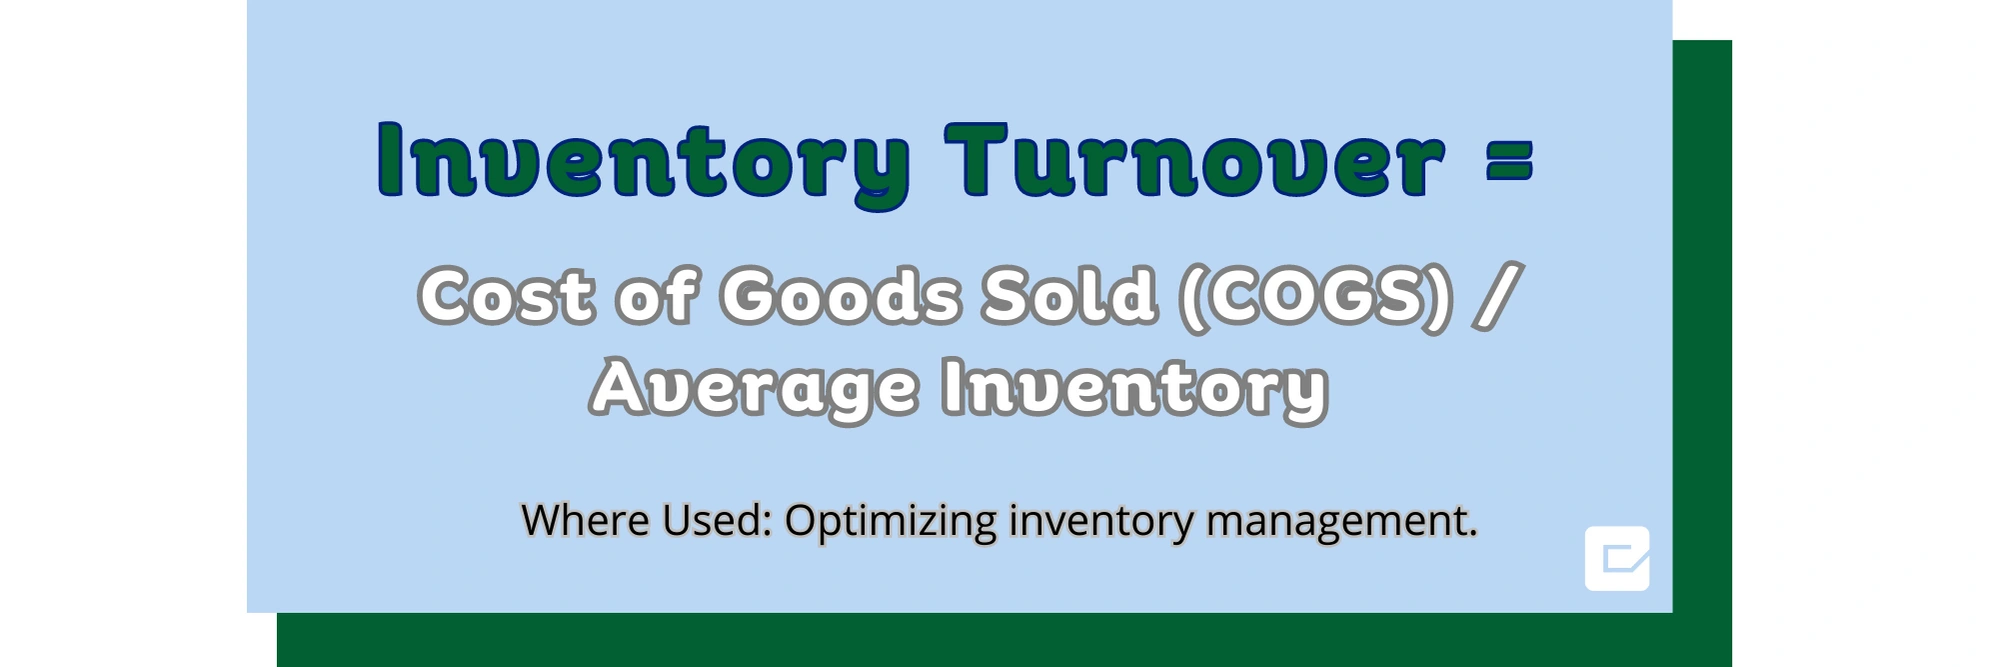 Inventory Turnover in Amazon KPI metrics